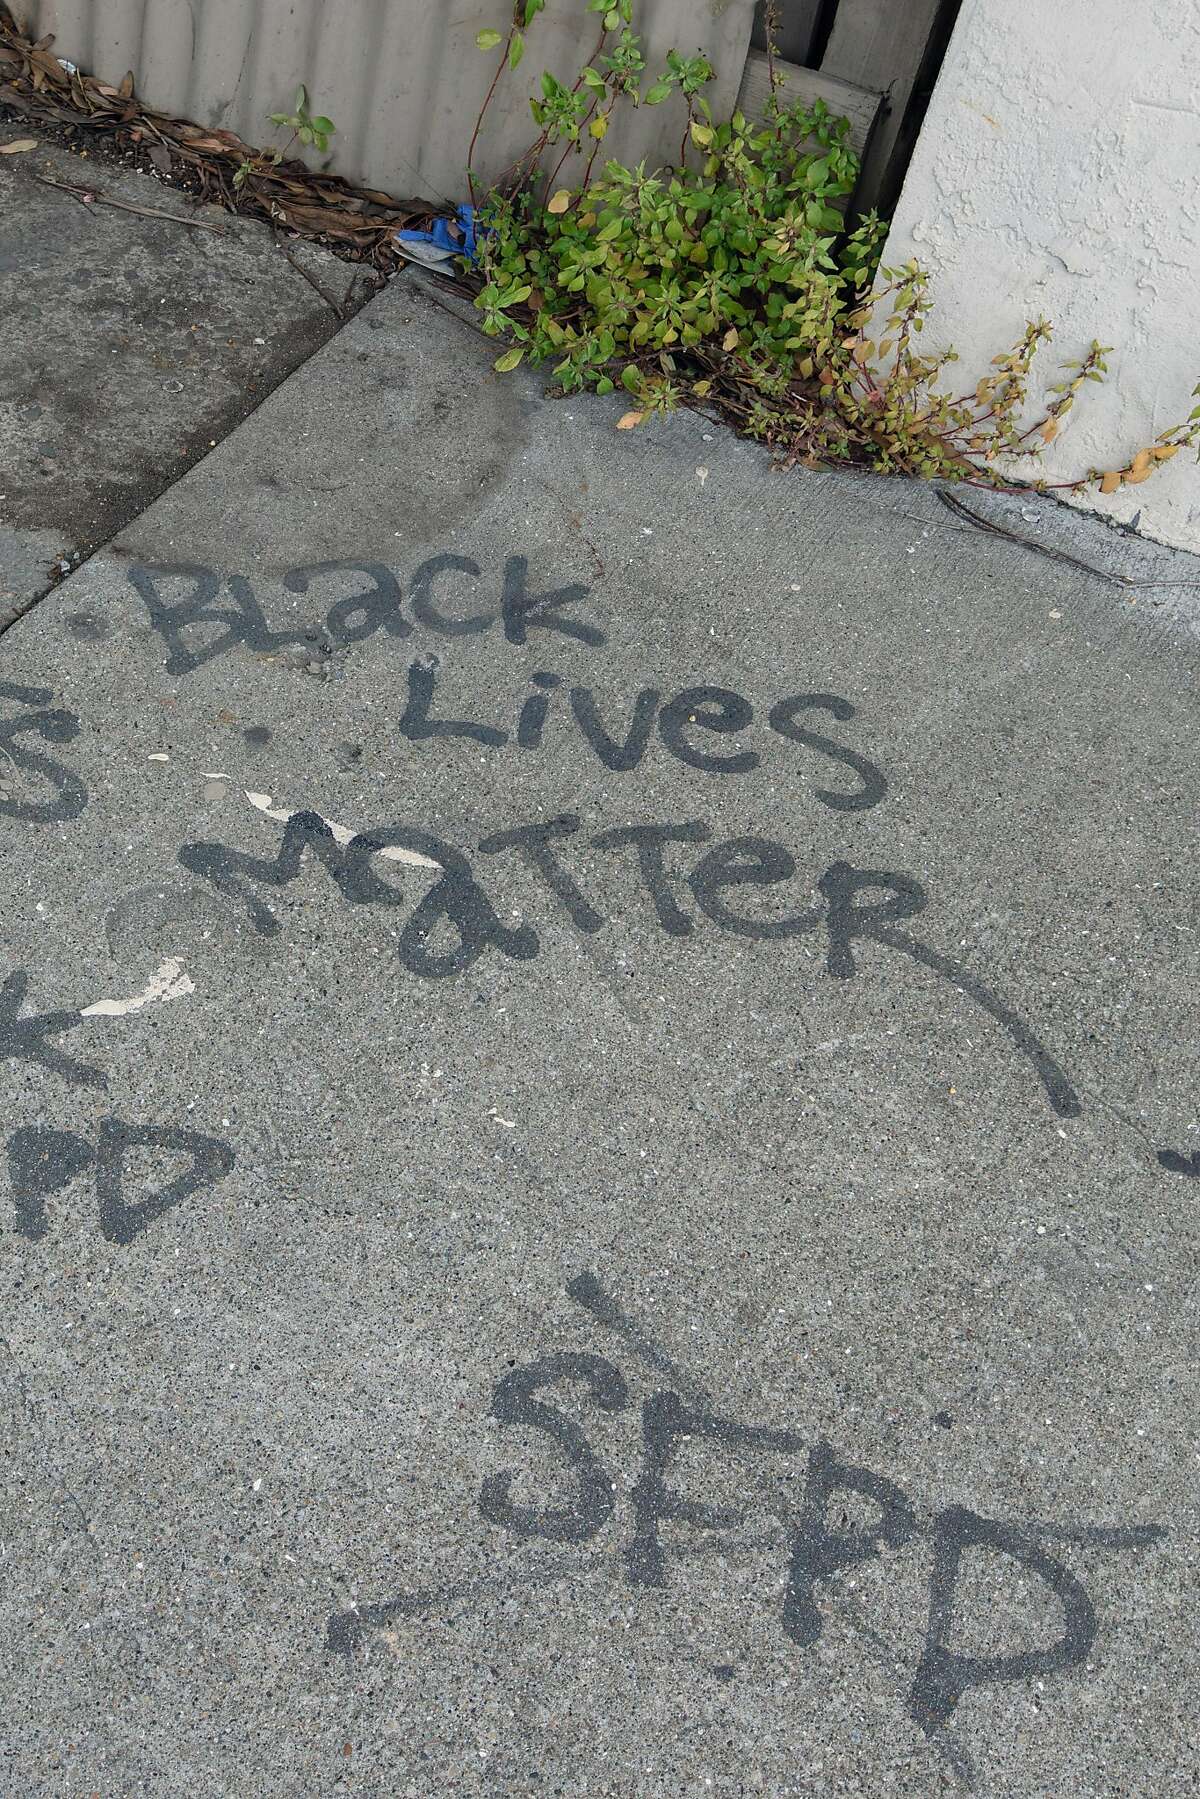 Graffiti marks the spot in San Francisco’s Bayview neighborhood where police fatally shot stabbing suspect Mario Woods.